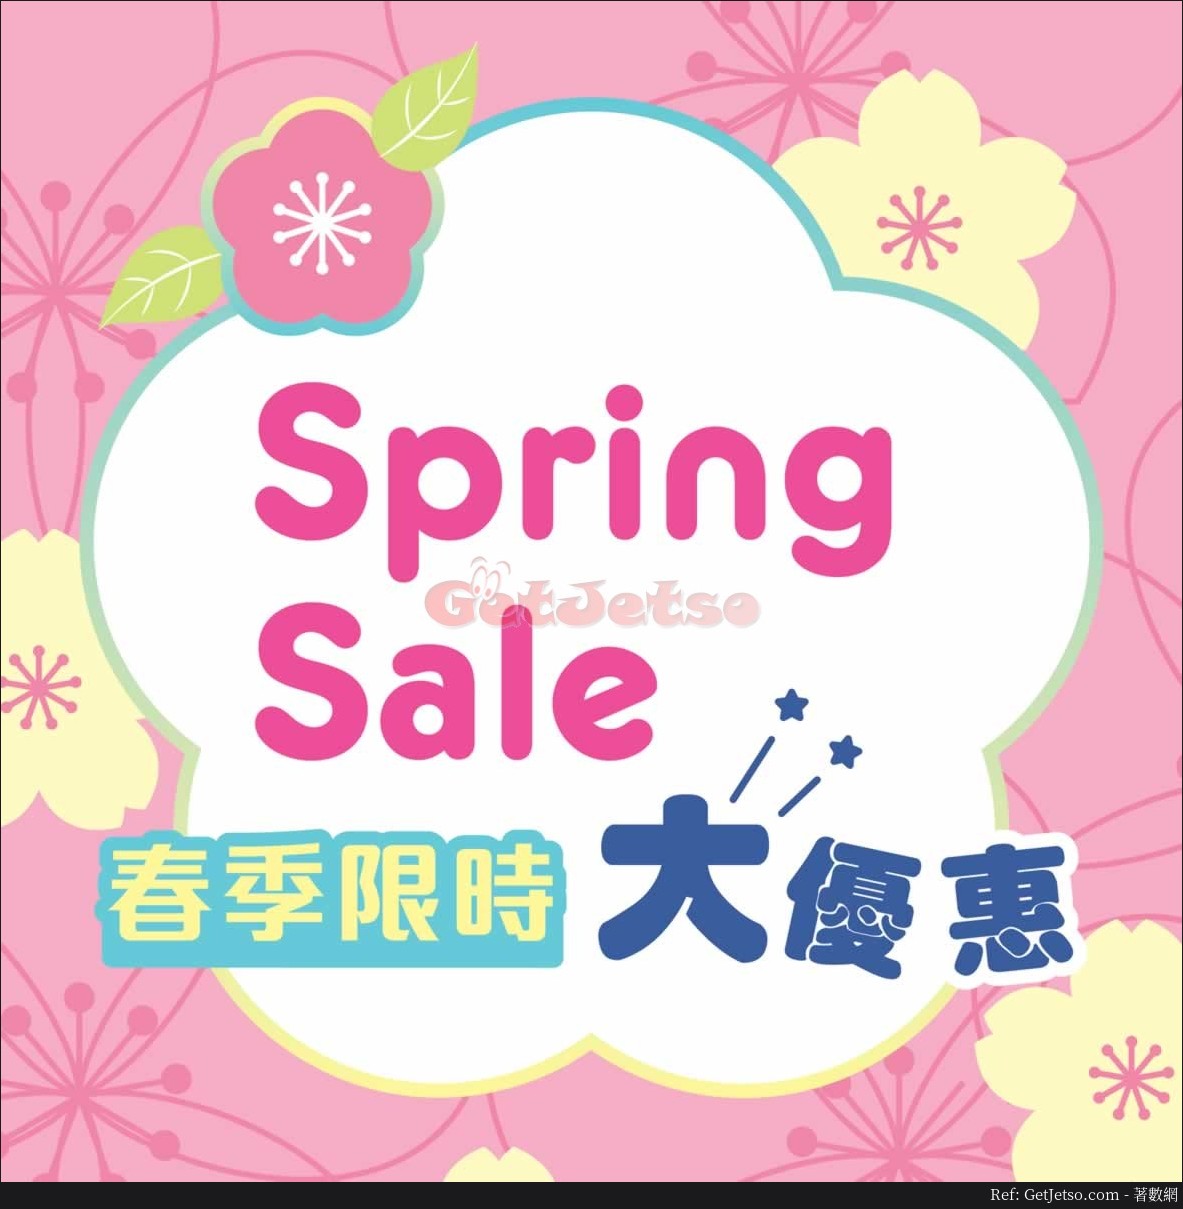 Sanrio Gift Gate 低至5折減價優惠(20年4月23日起)圖片1